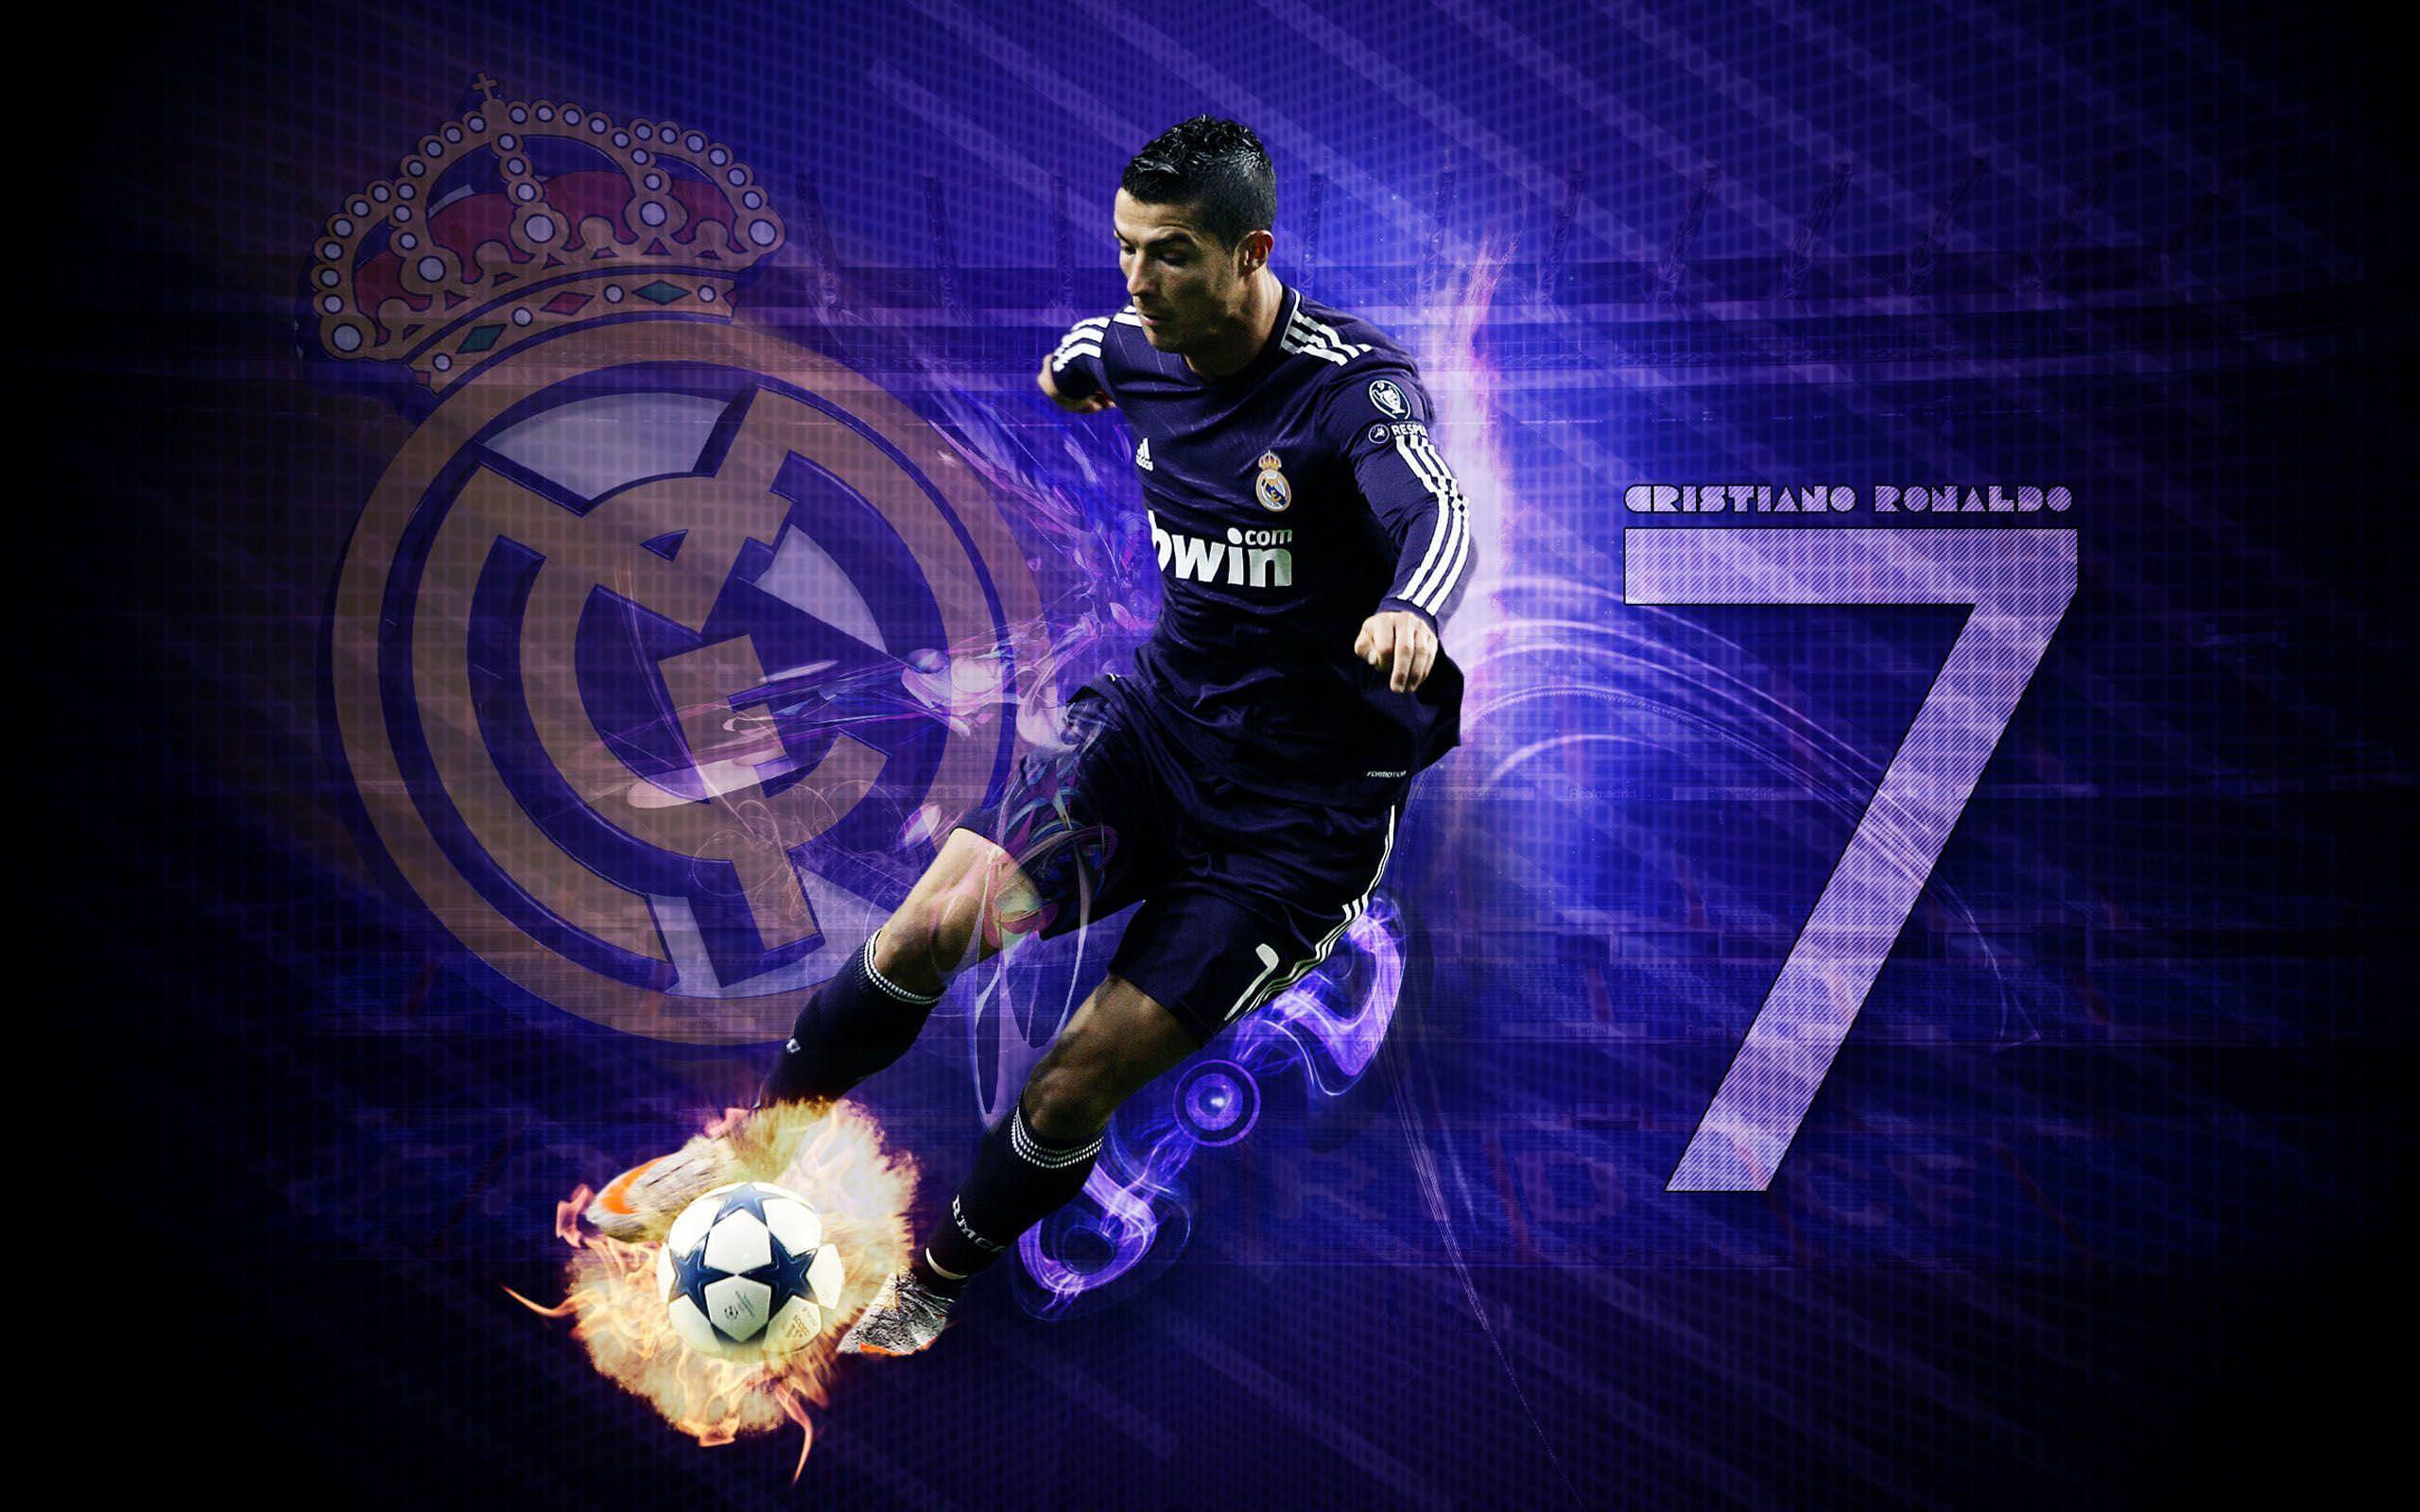 Download Ronaldo Real Madrid Wallpapers FHD 1080p Desktop Backgrounds For PC  Mac Wallpaper 